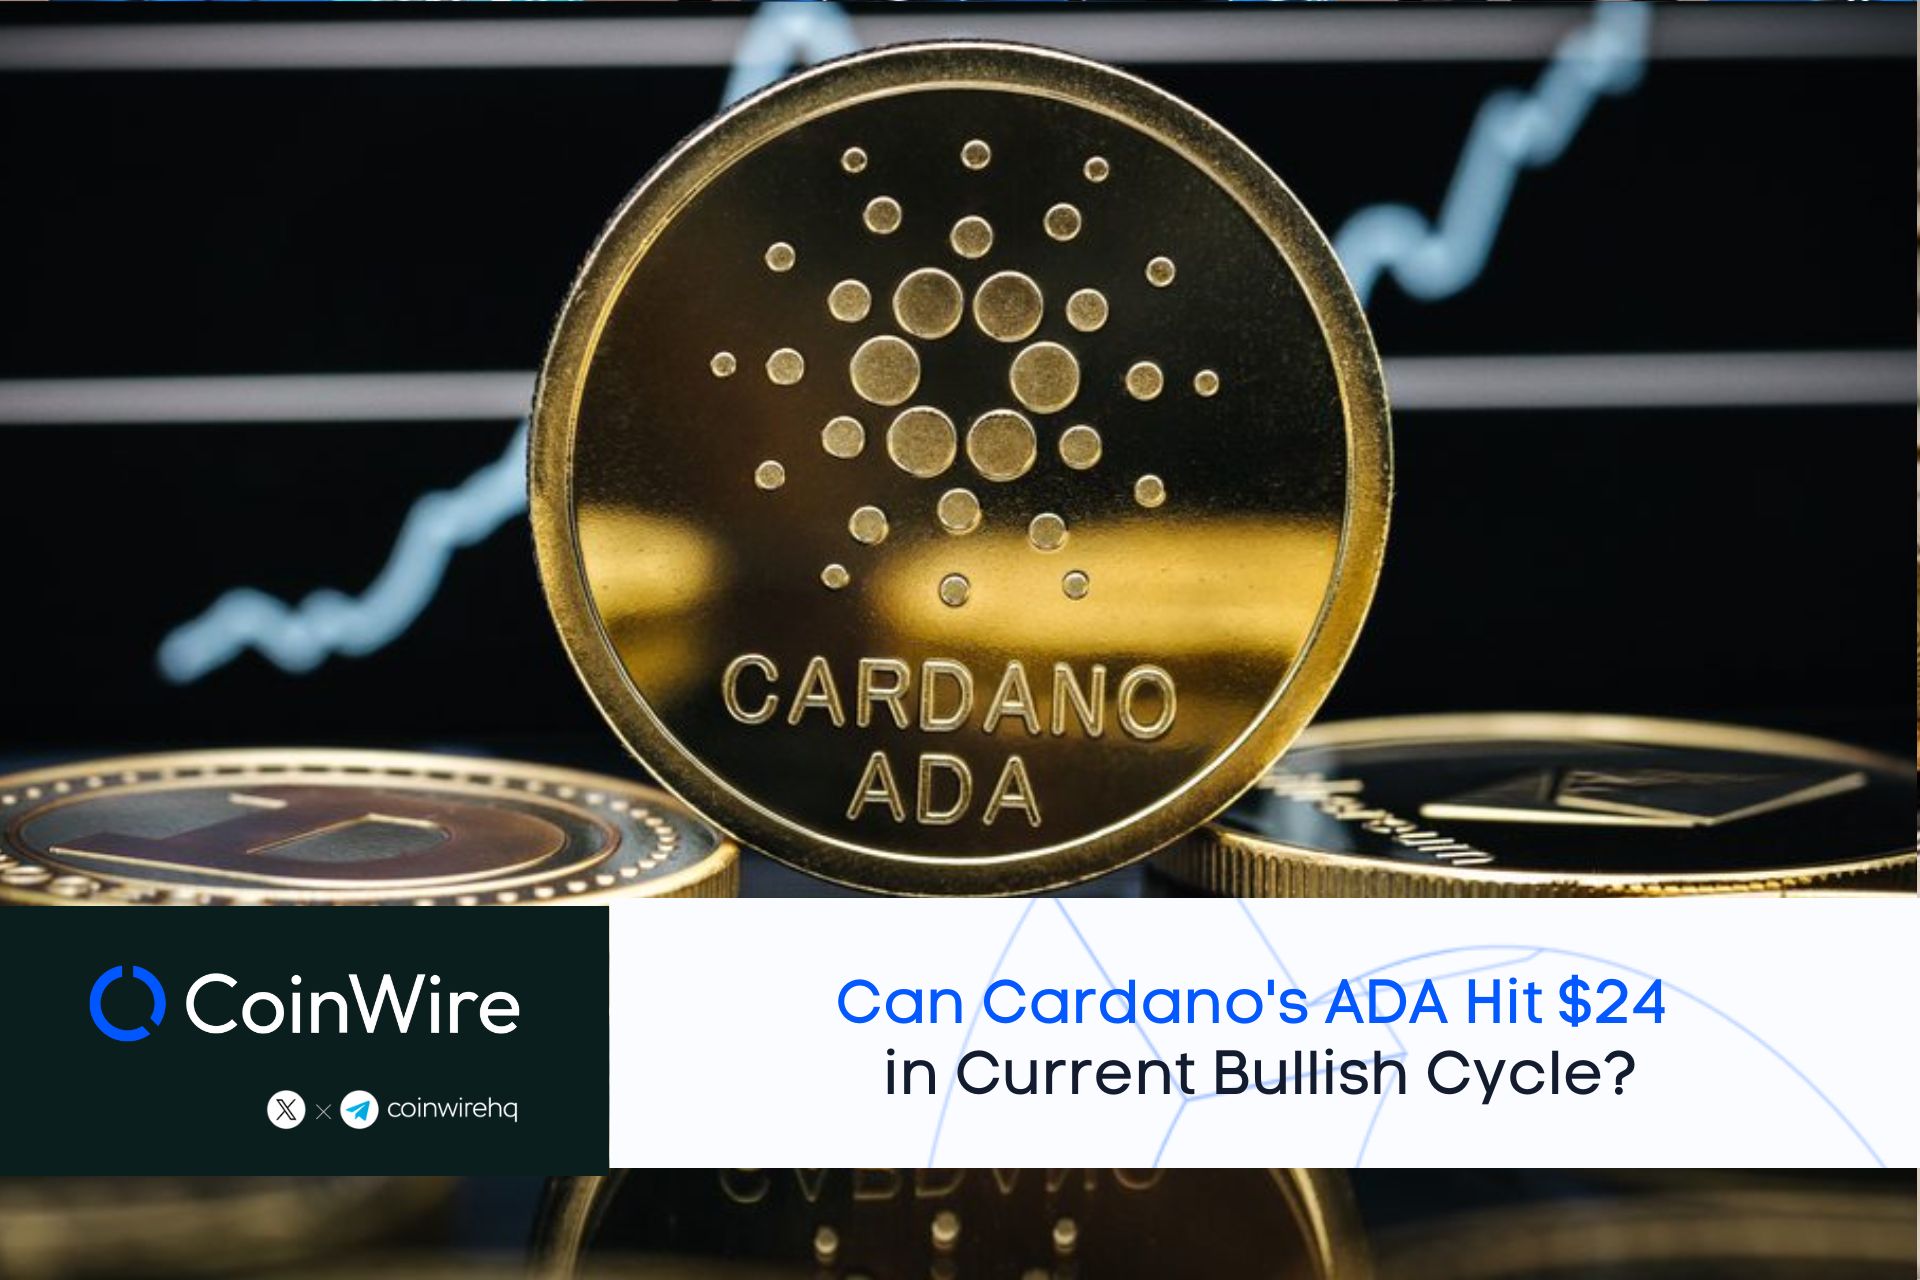 Can Cardano's ADA Hit $24 in Current Bullish Cycle?